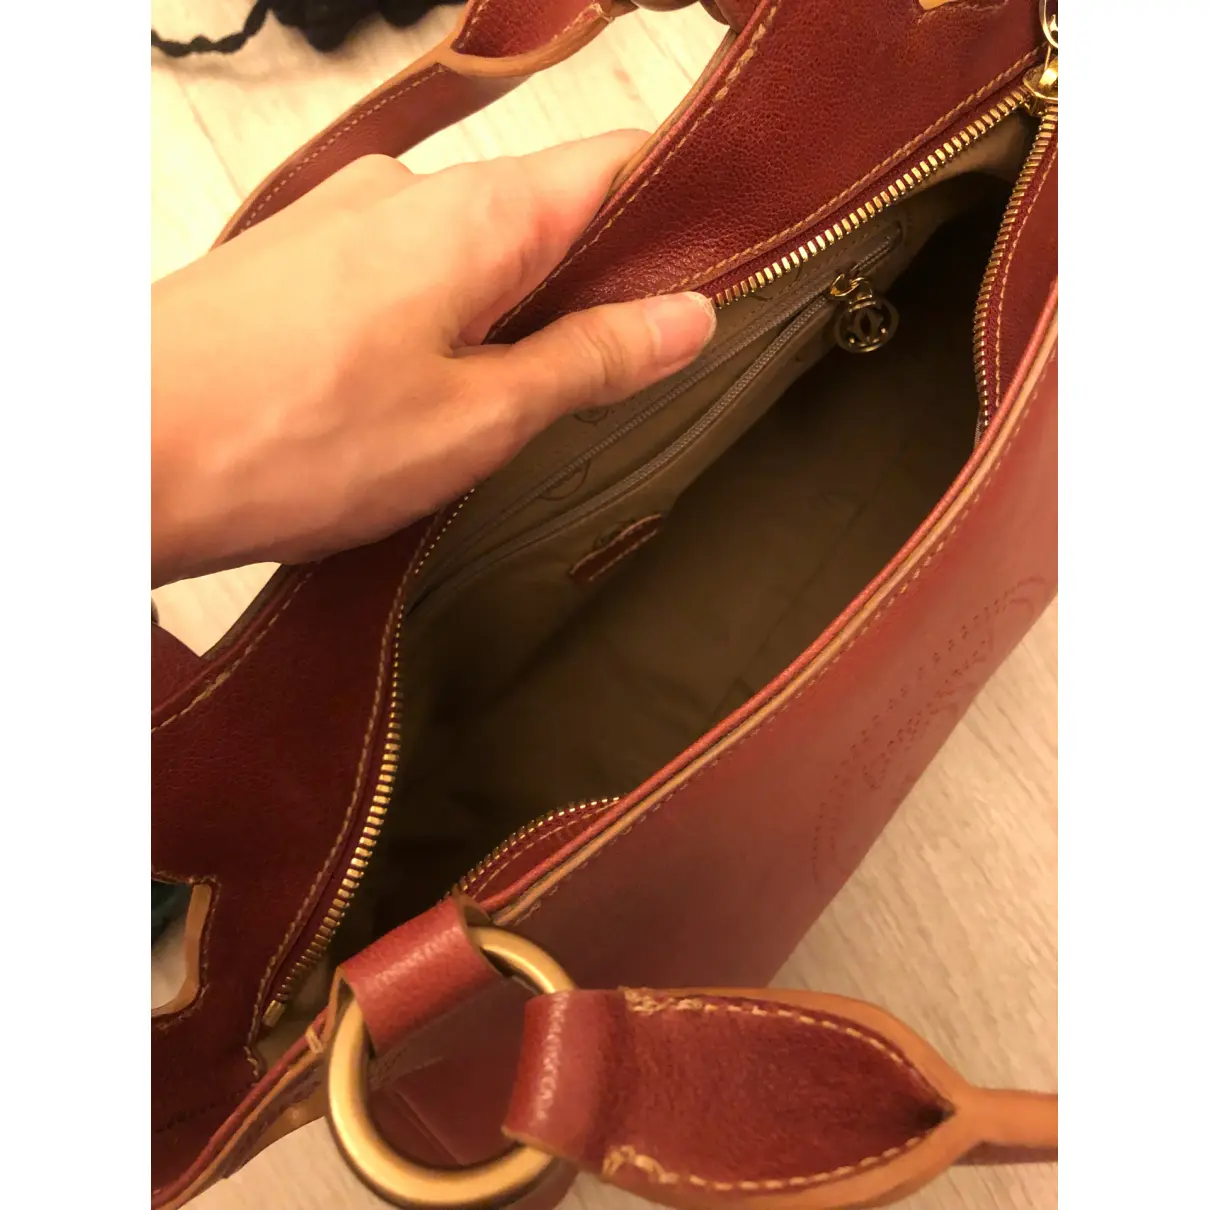 Marcello leather bag Cartier